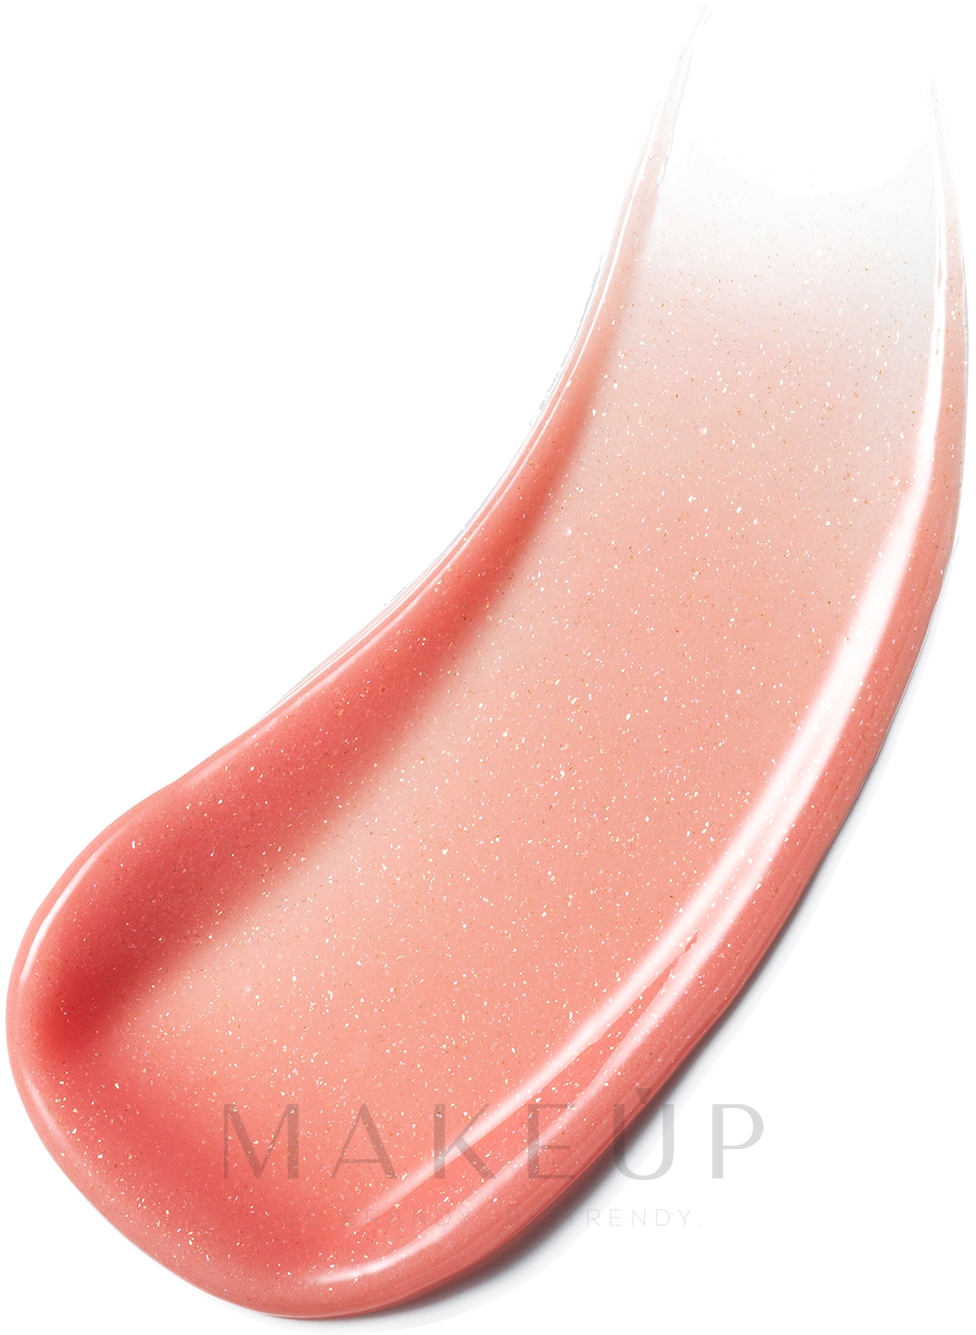 Getönter Lippenbalsam - Estee Lauder Pure Color Revitalizing Crystal Balm — Bild 002 - Cosmic